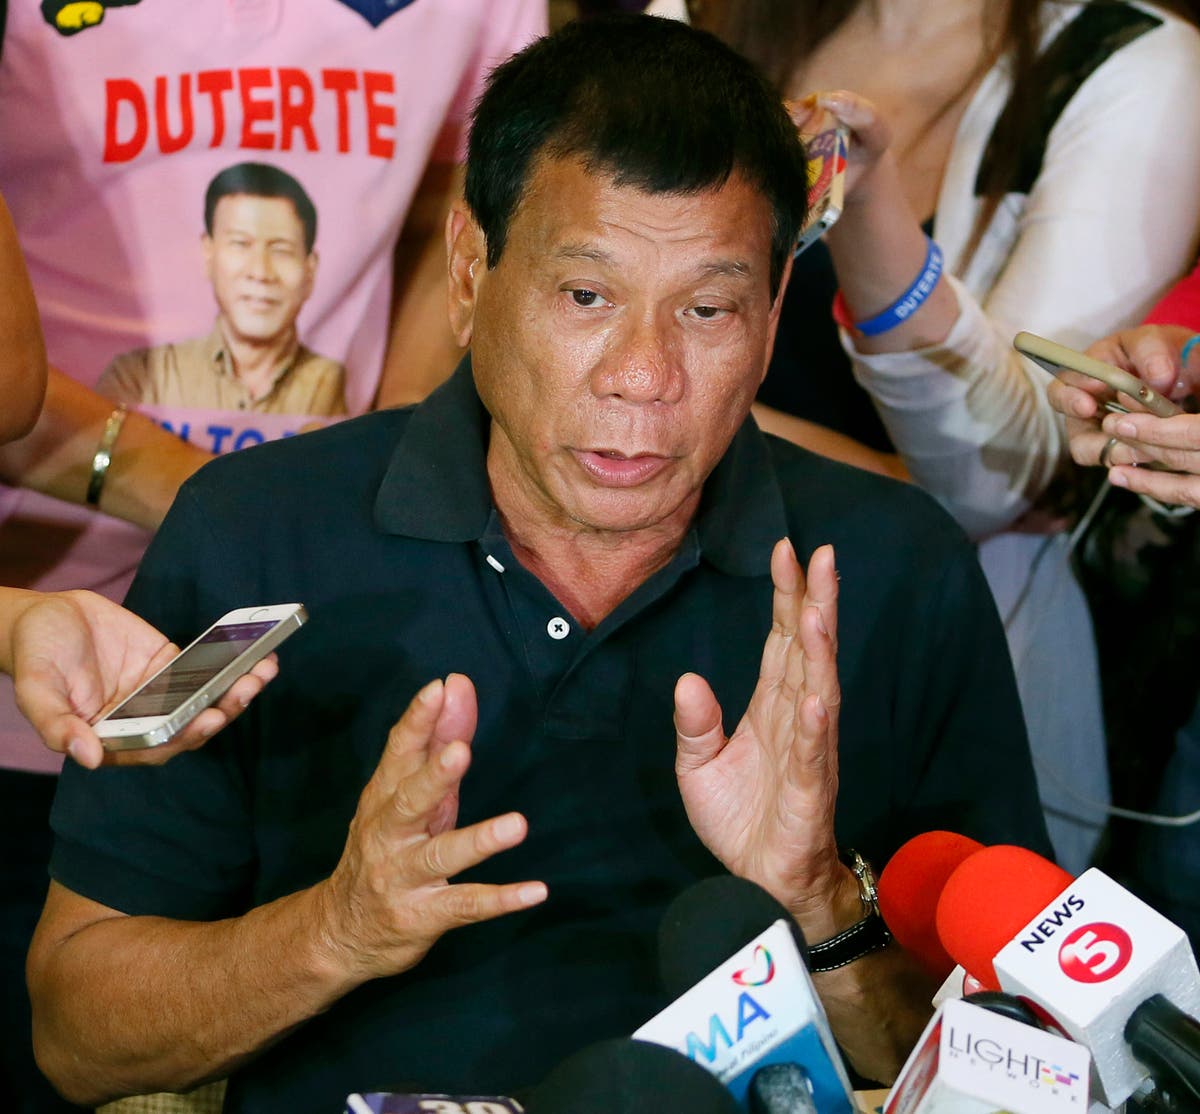 Philippines' Duterte will 'die first' before facing ICC